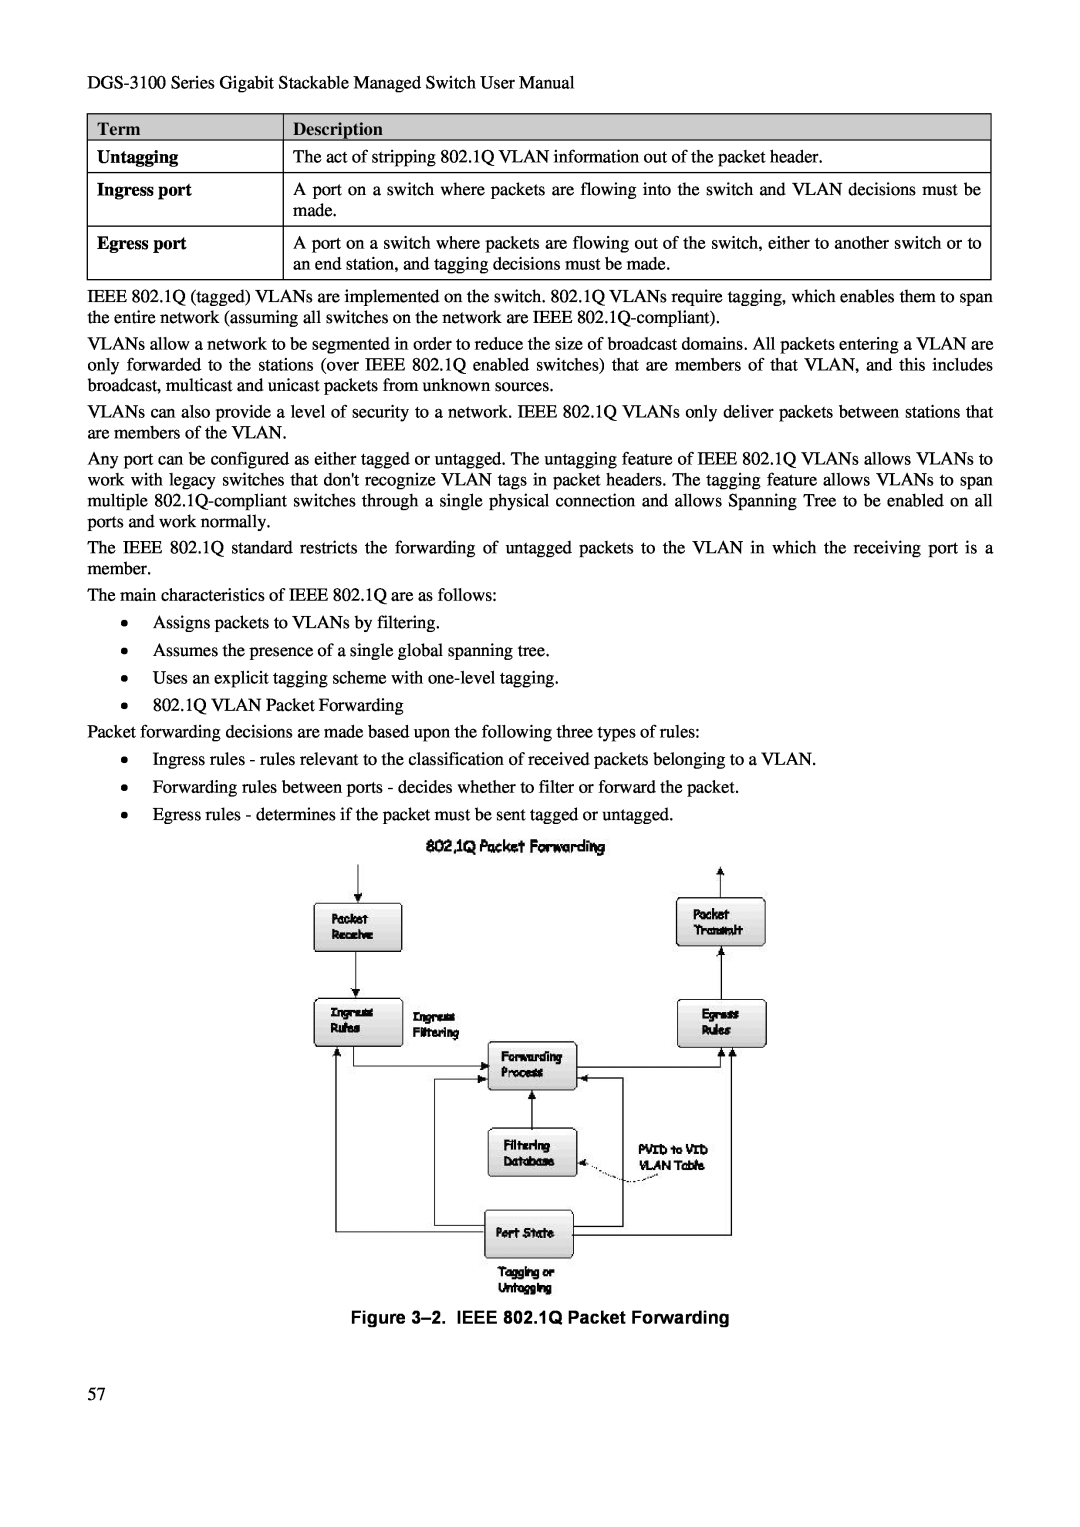 D-Link DGS-3100 user manual Term Untagging Ingress port Egress port, Description, 2. IEEE 802.1Q Packet Forwarding 